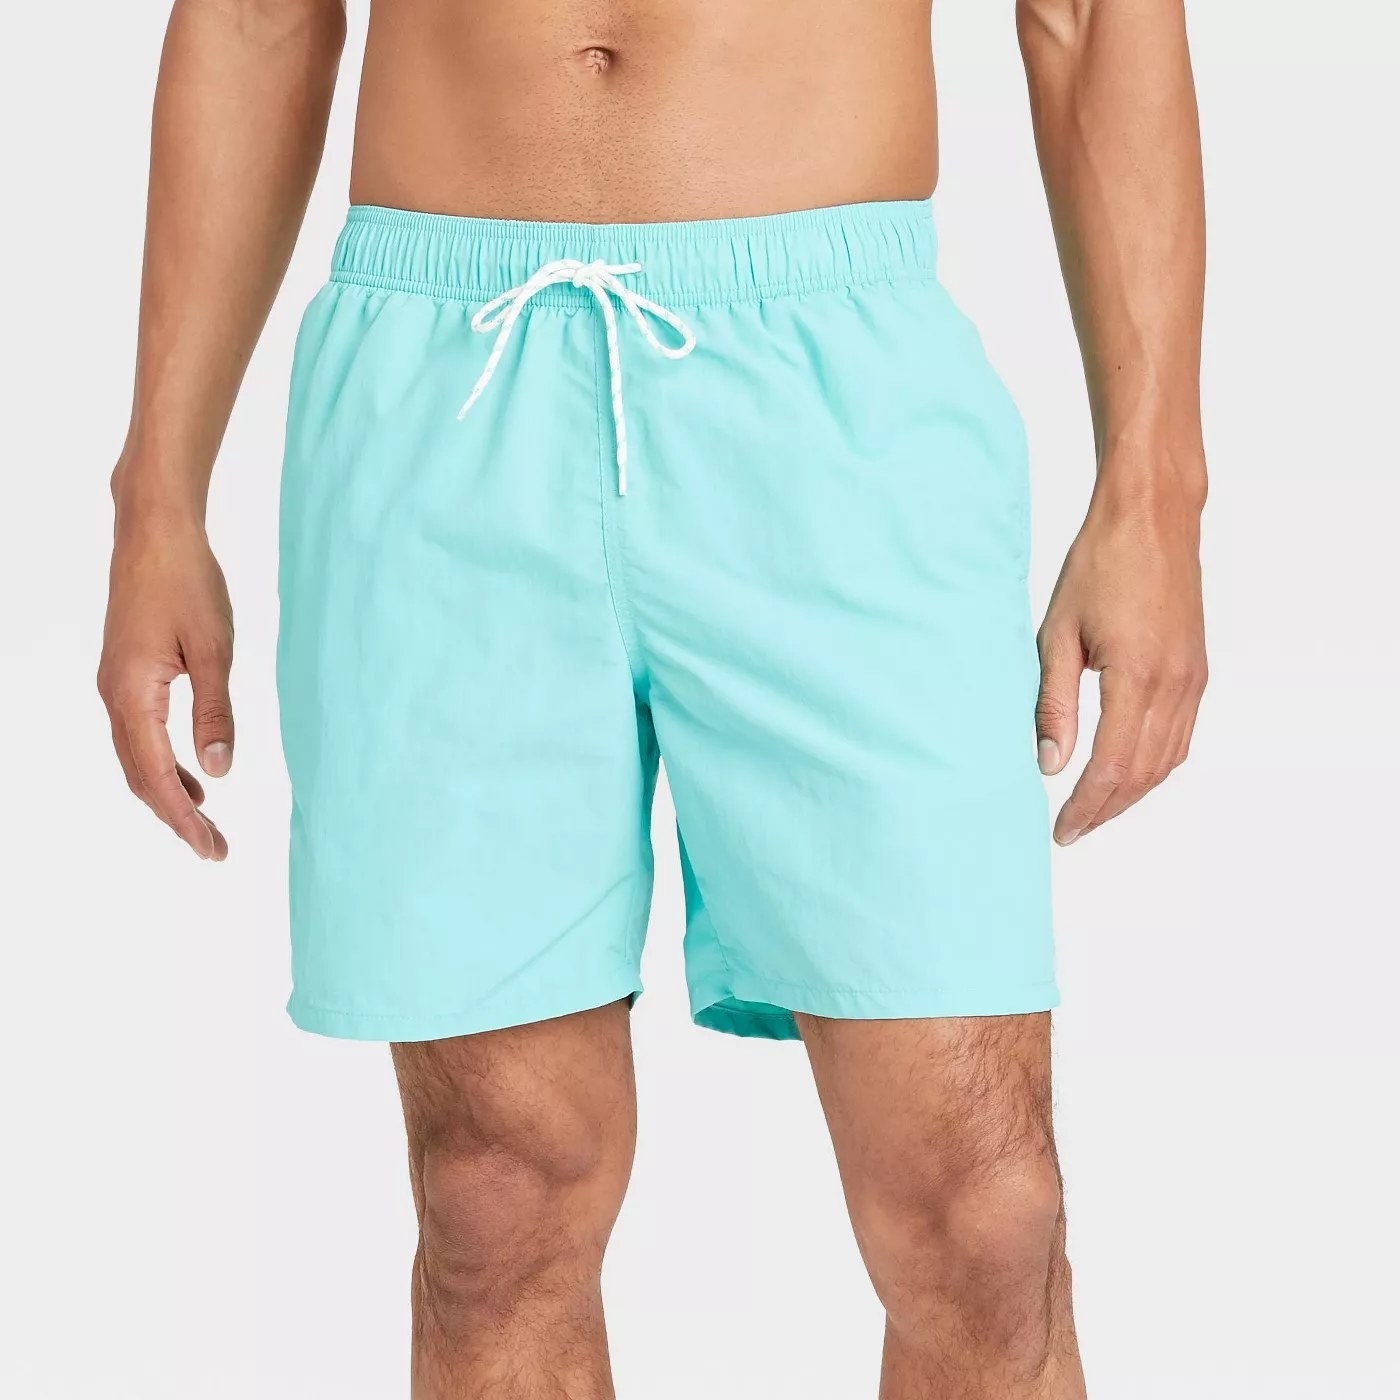 Light blue swim shorts